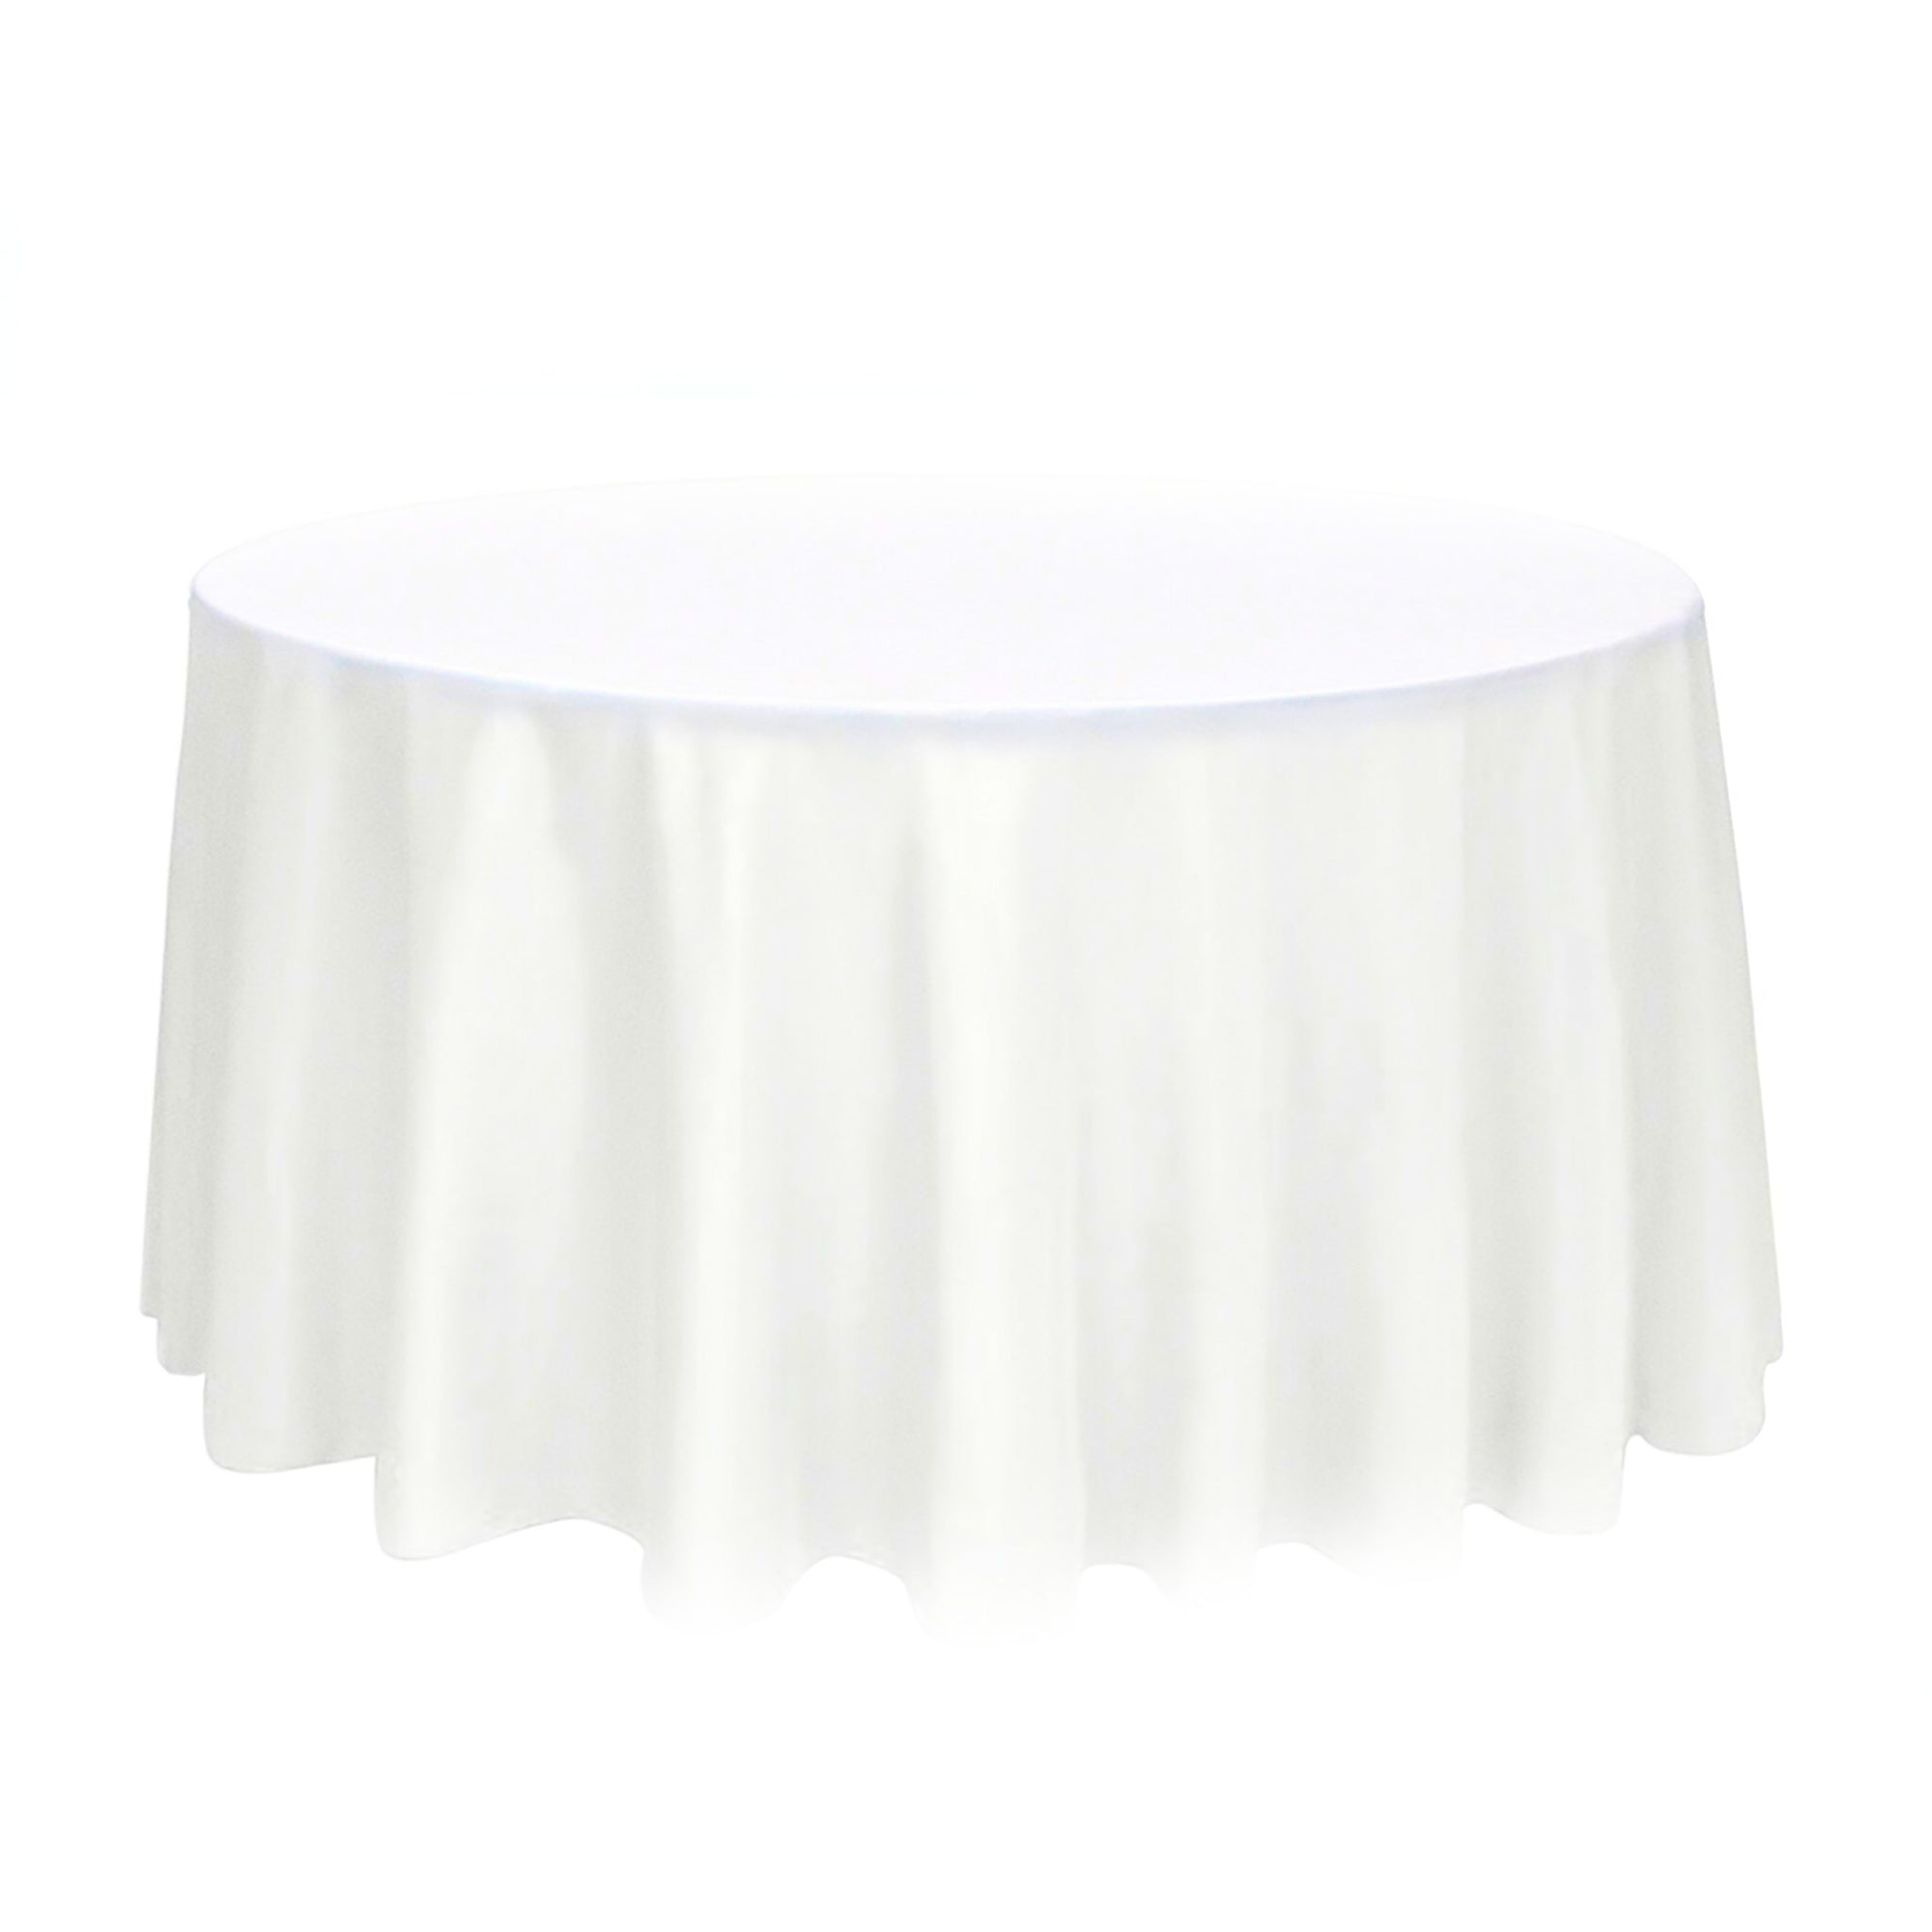 Regular round tablecloth